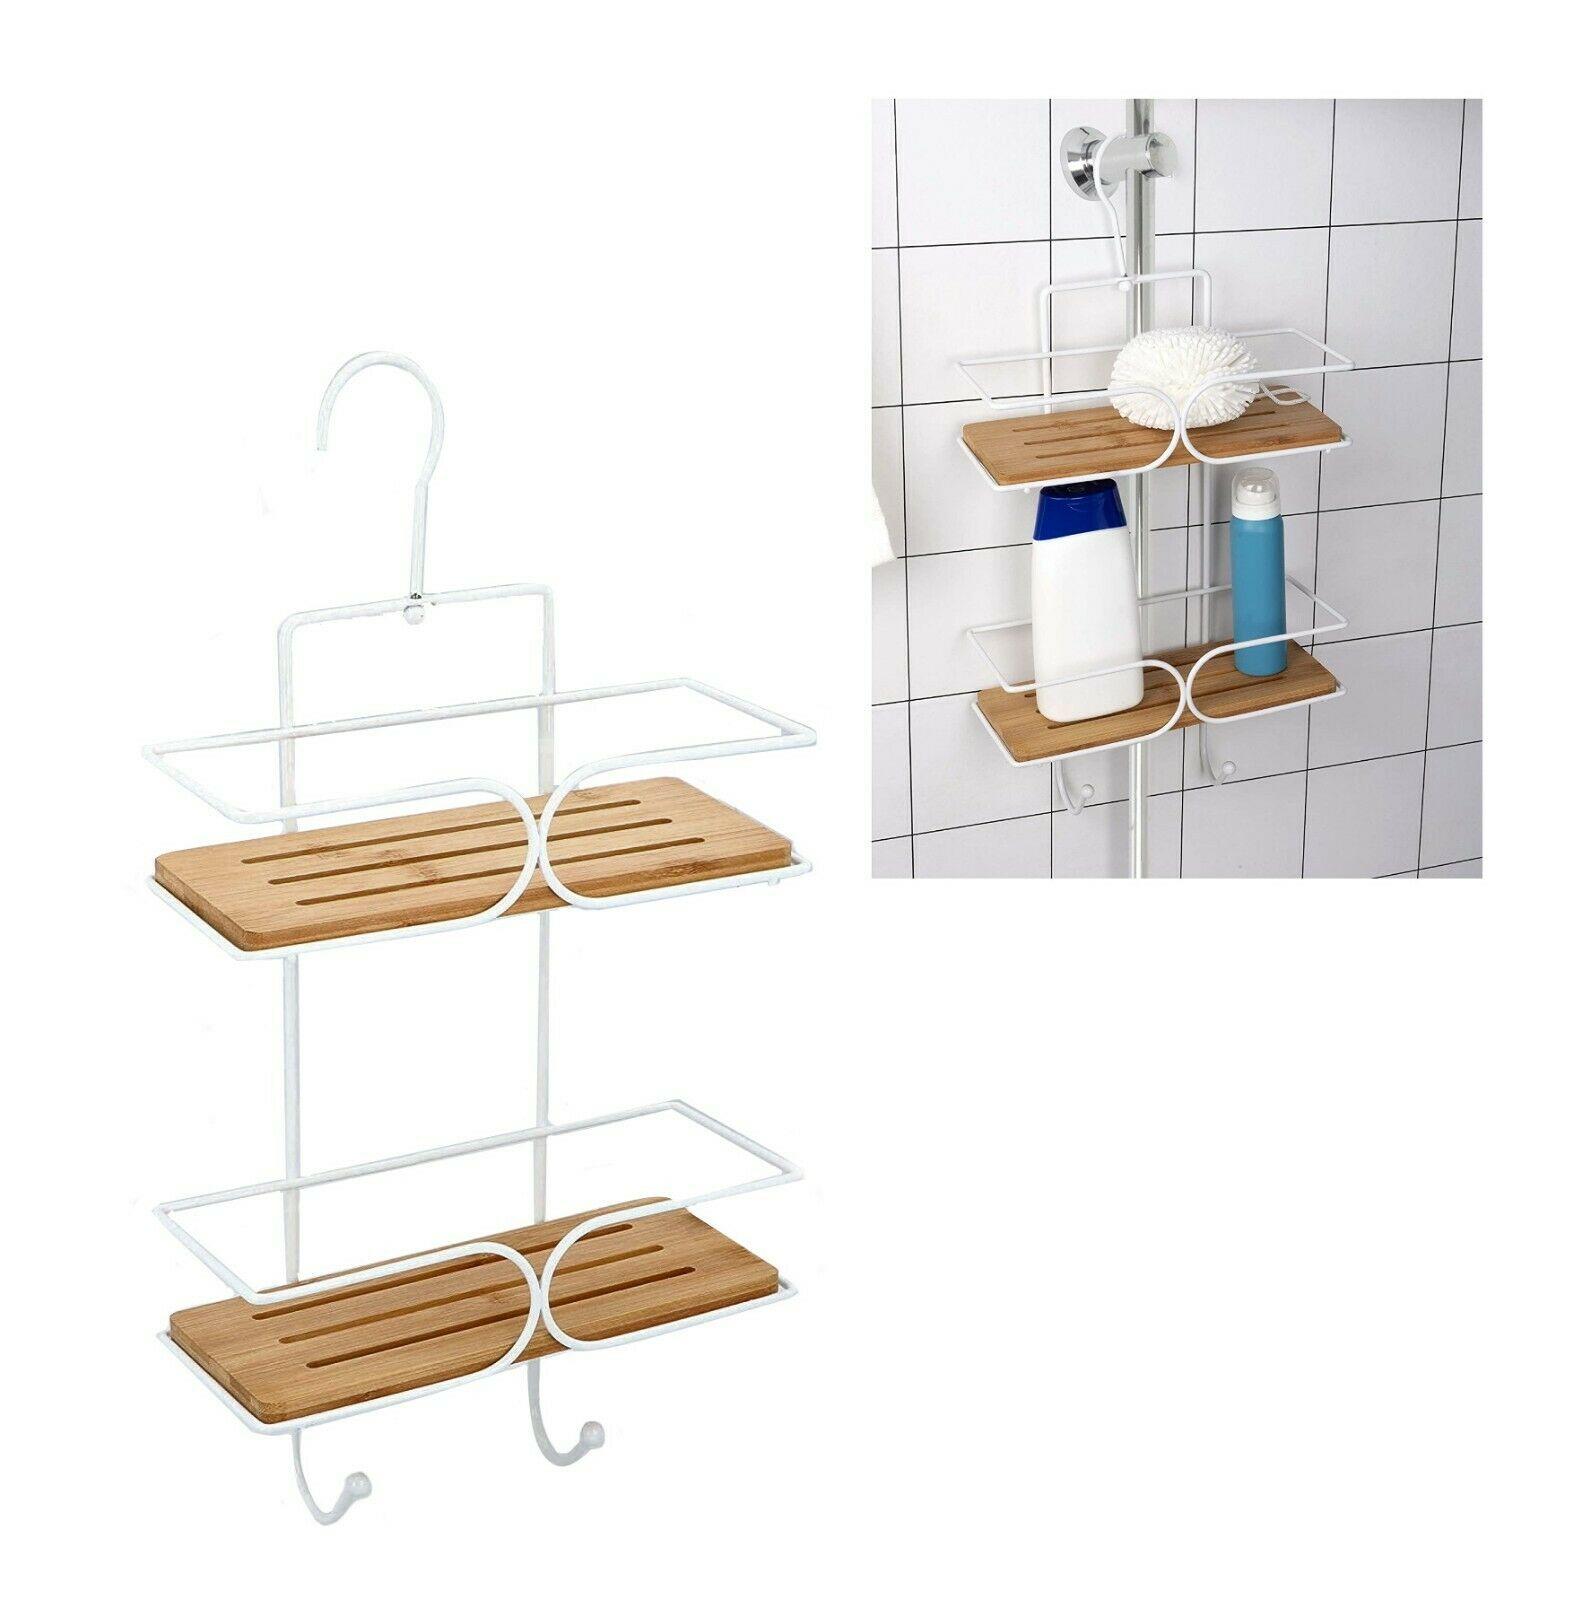 Details about   Wide Bath Hanging Shower Caddy Bathroom Rack Organiser Tray Holder Accessory 